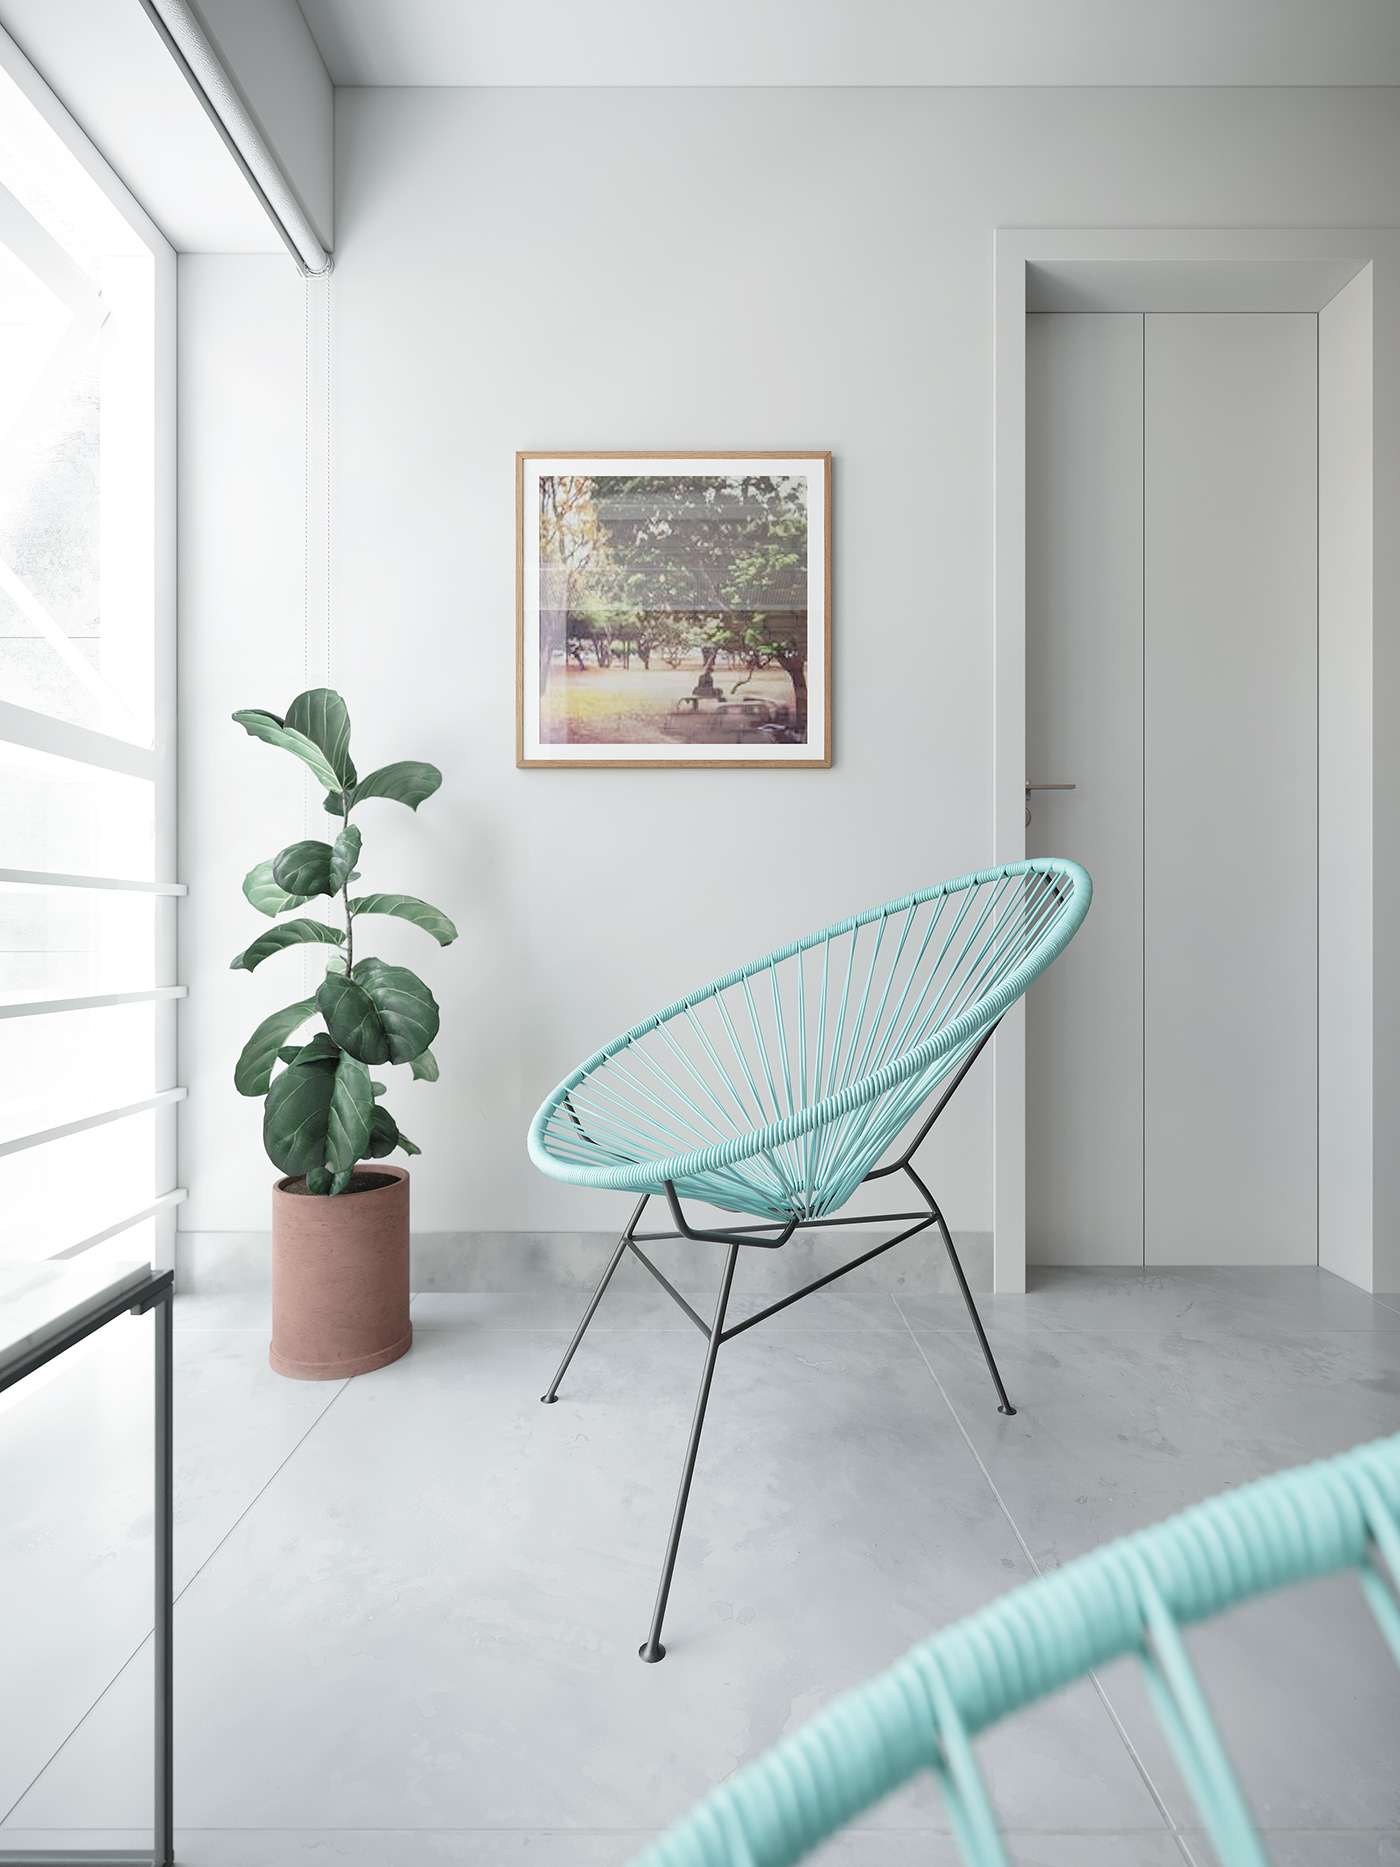 3ds max apartment architecture archviz corona render  interior design  Render visualization visualizer